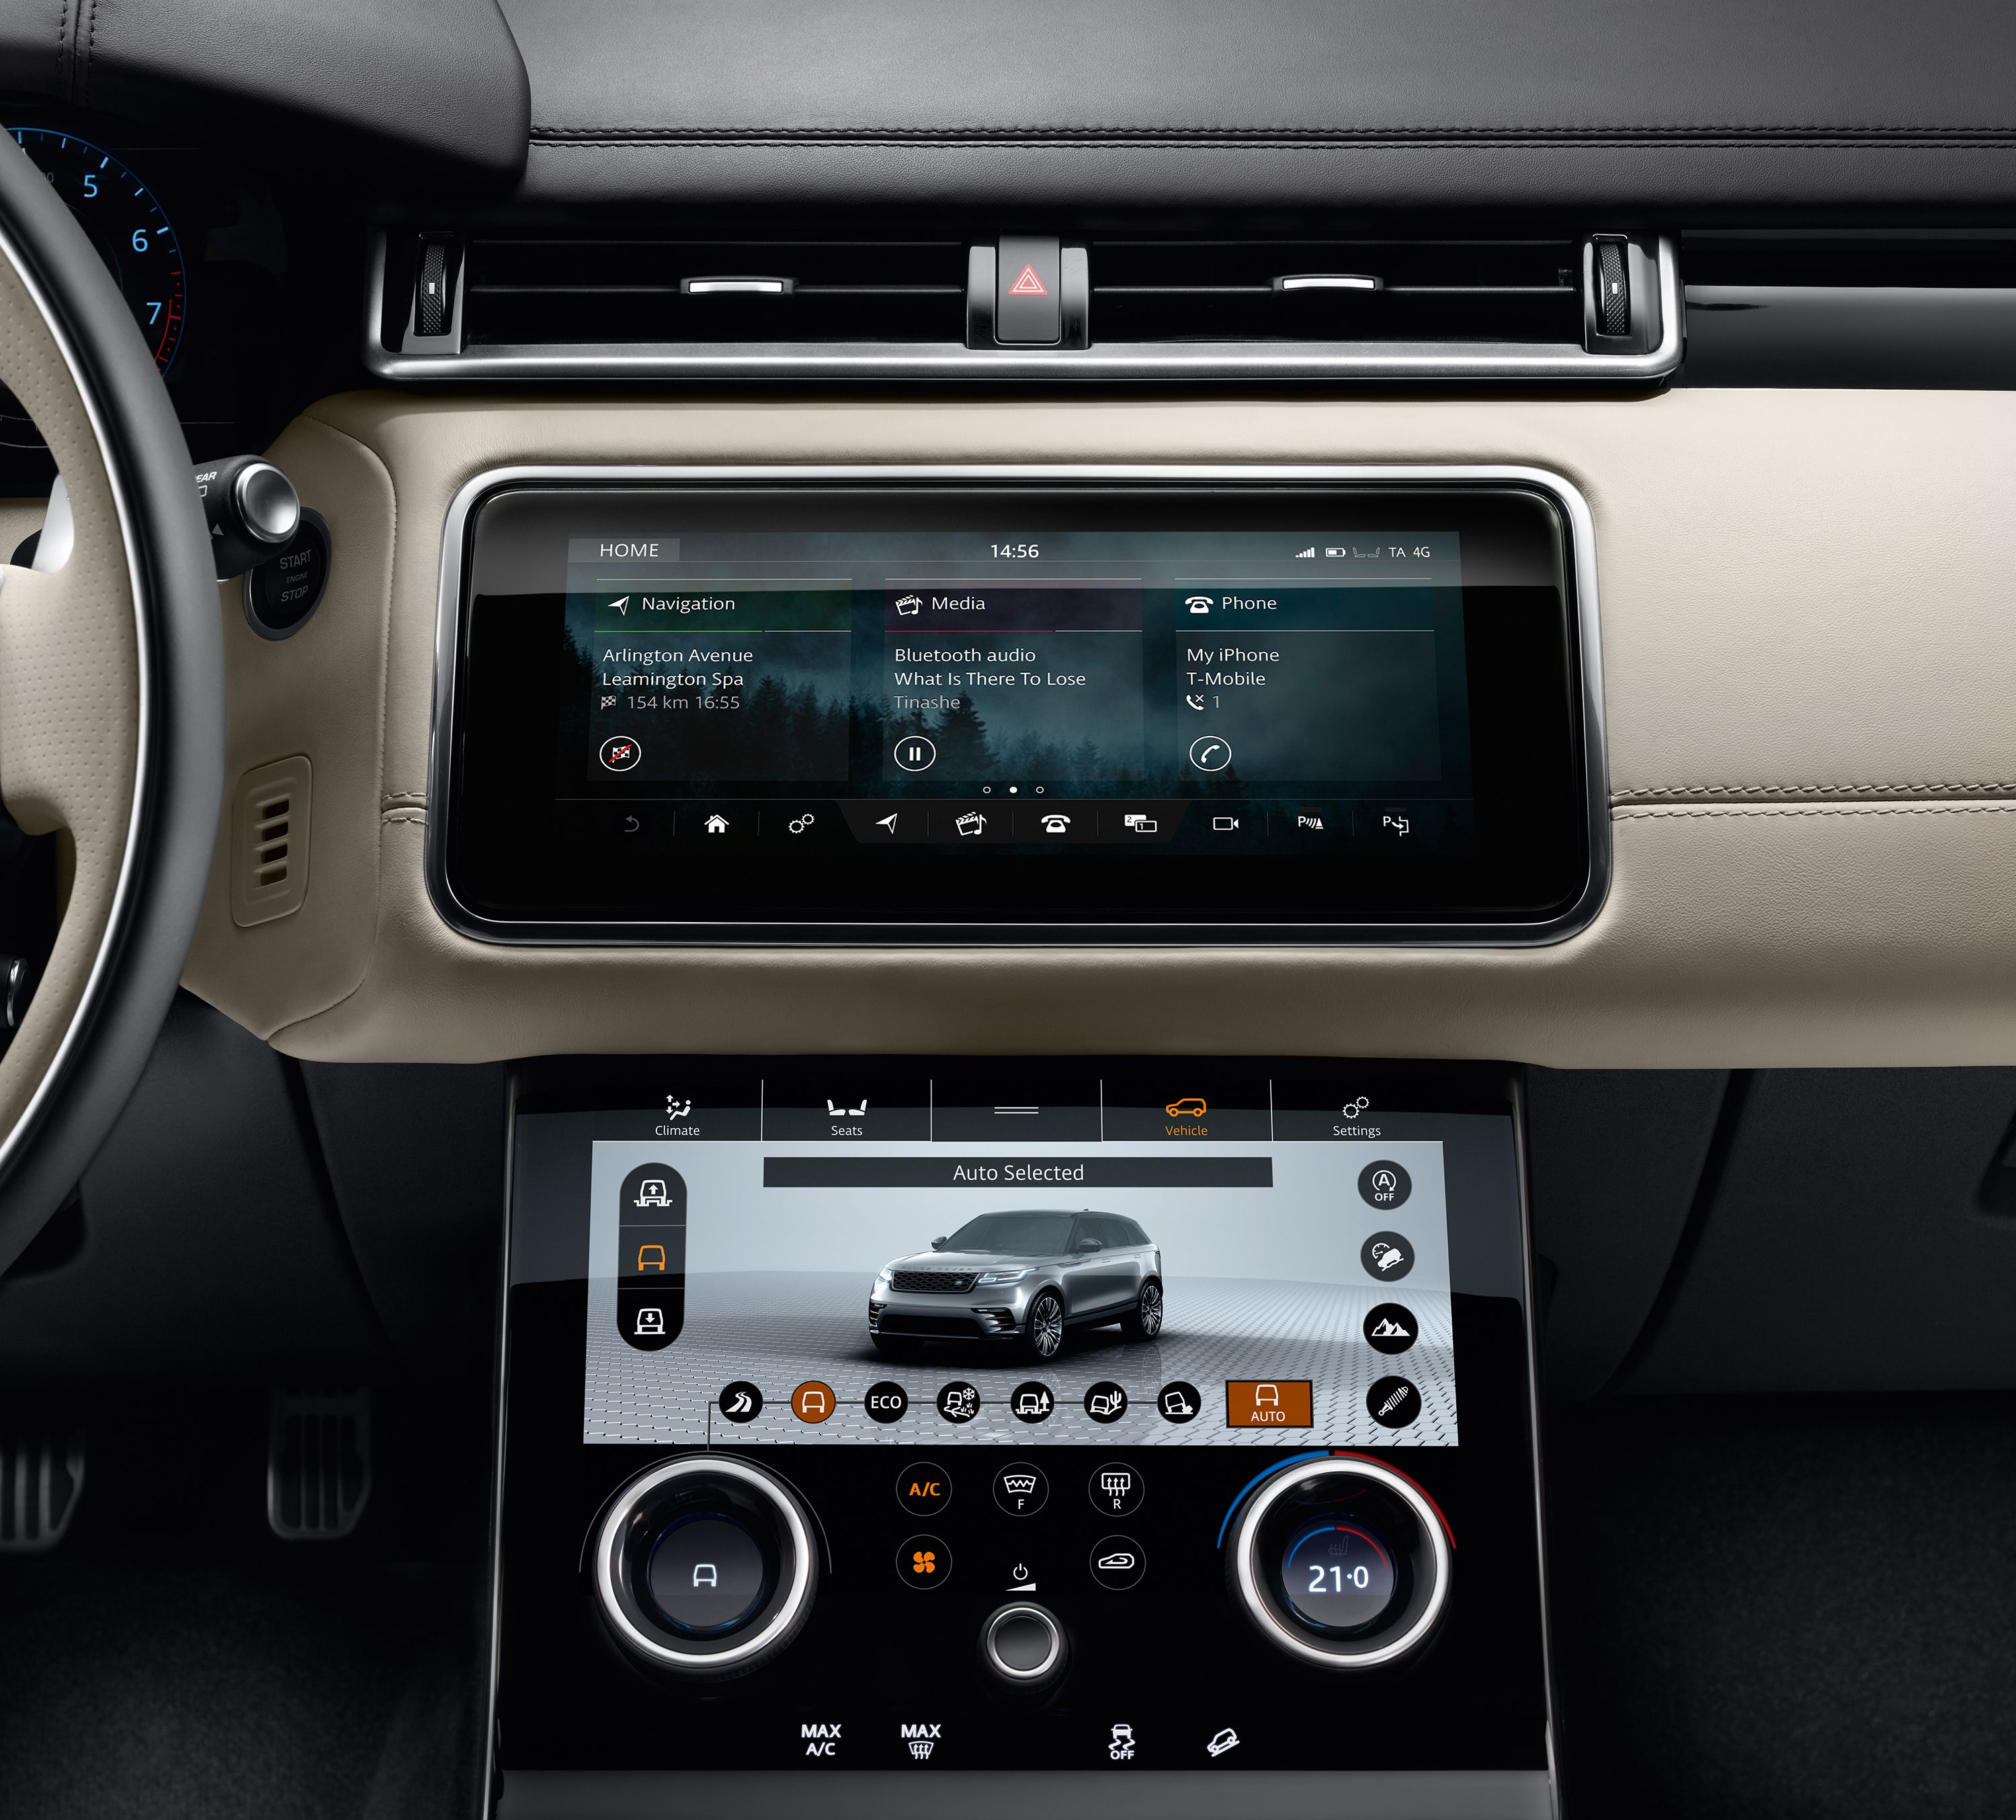 Visteon Showcases HD Digital Display Technologies in Range Rover Velar